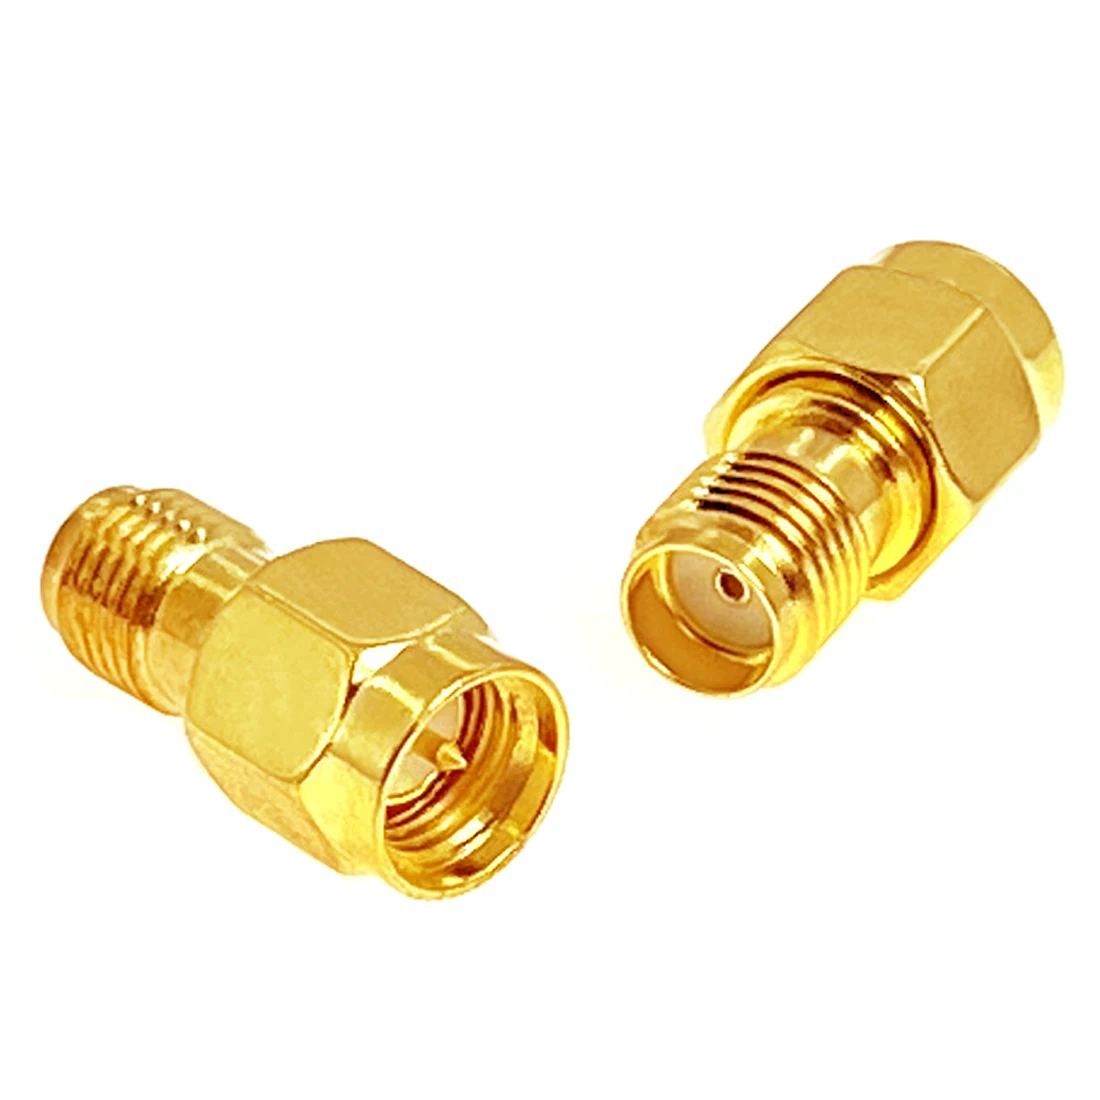 1pc SMA Male Plug to SMA Female Jack RF Coax Adapter Convertor Coupler  Straight Goldplated Coupler New Wholesale AliExpress